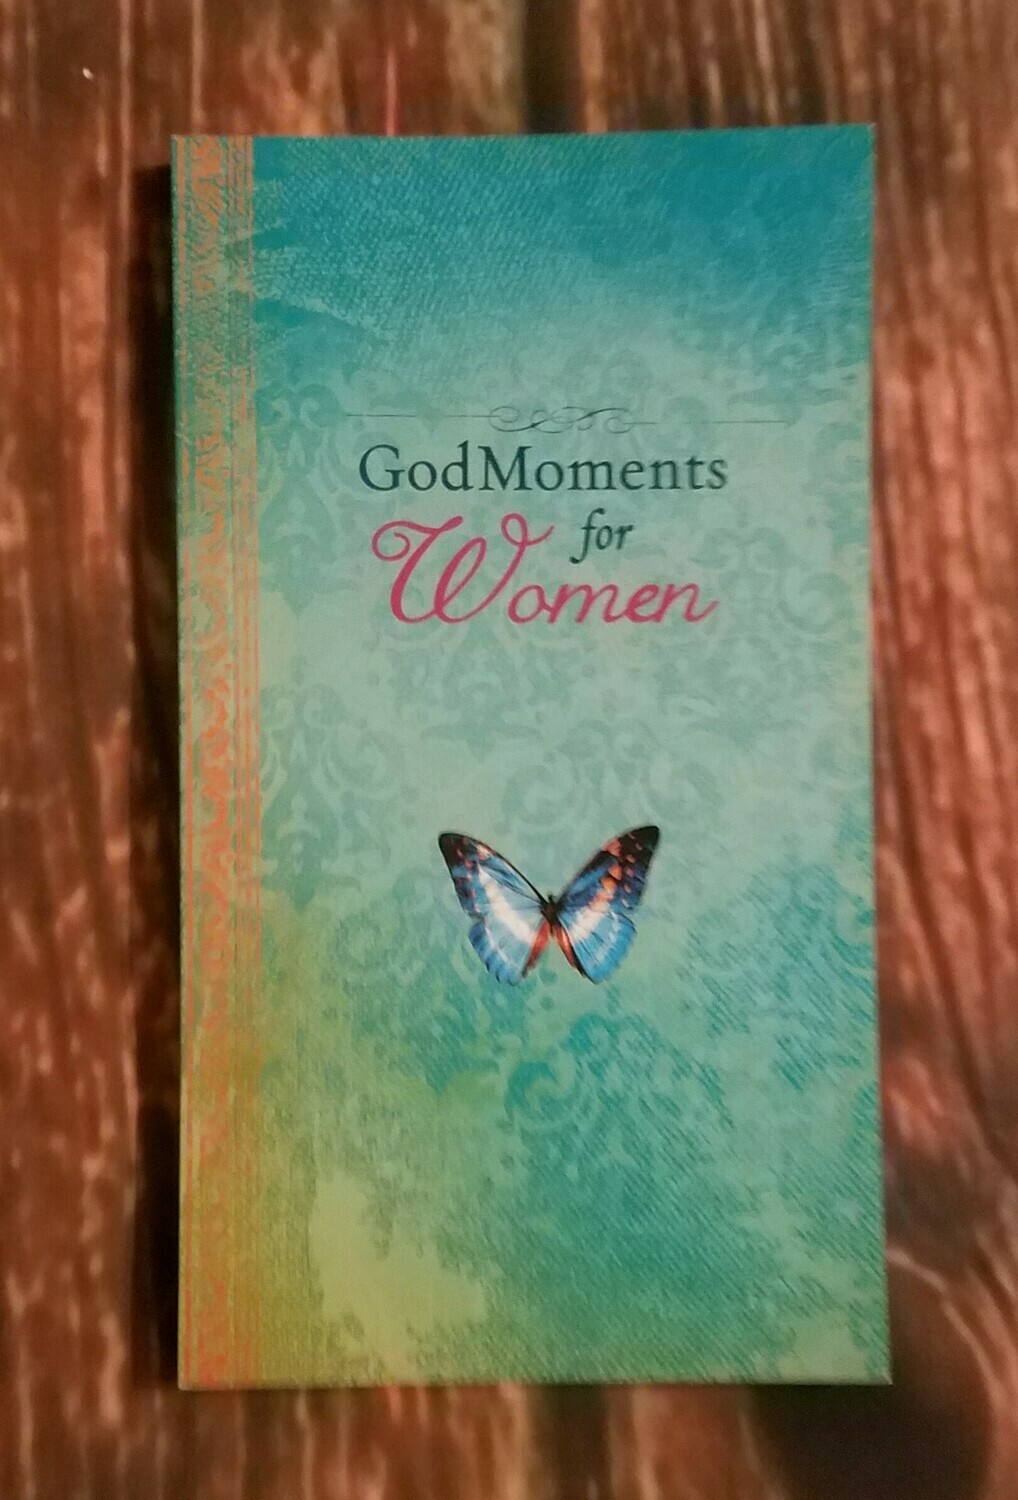 God Moments for Women by Carolyn Larsen